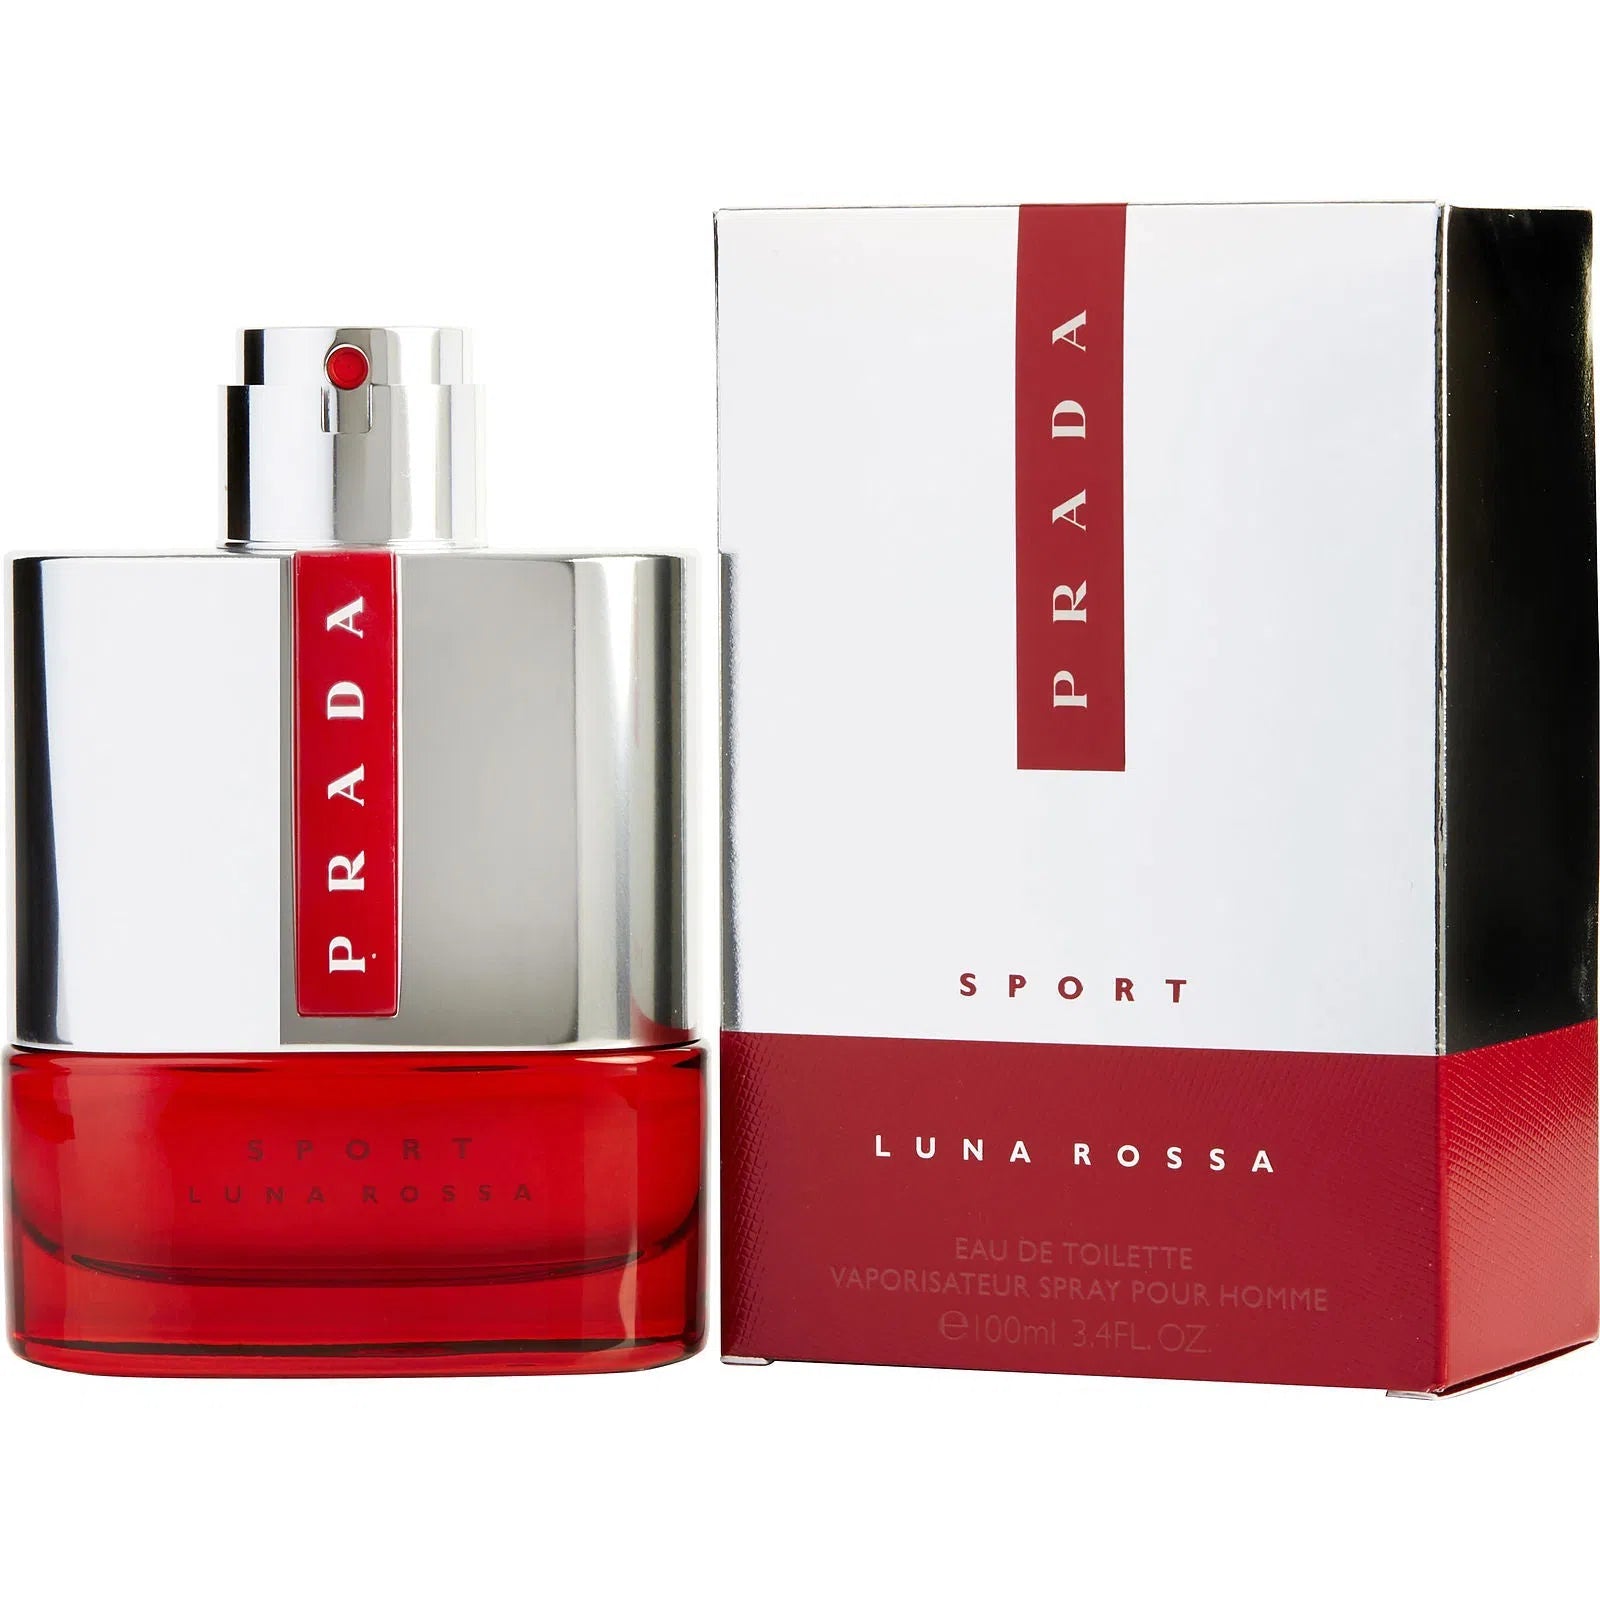 Perfume Prada Luna Rossa Sport EDT (M) / 100 ml - 3614273544962- Prive Perfumes Honduras